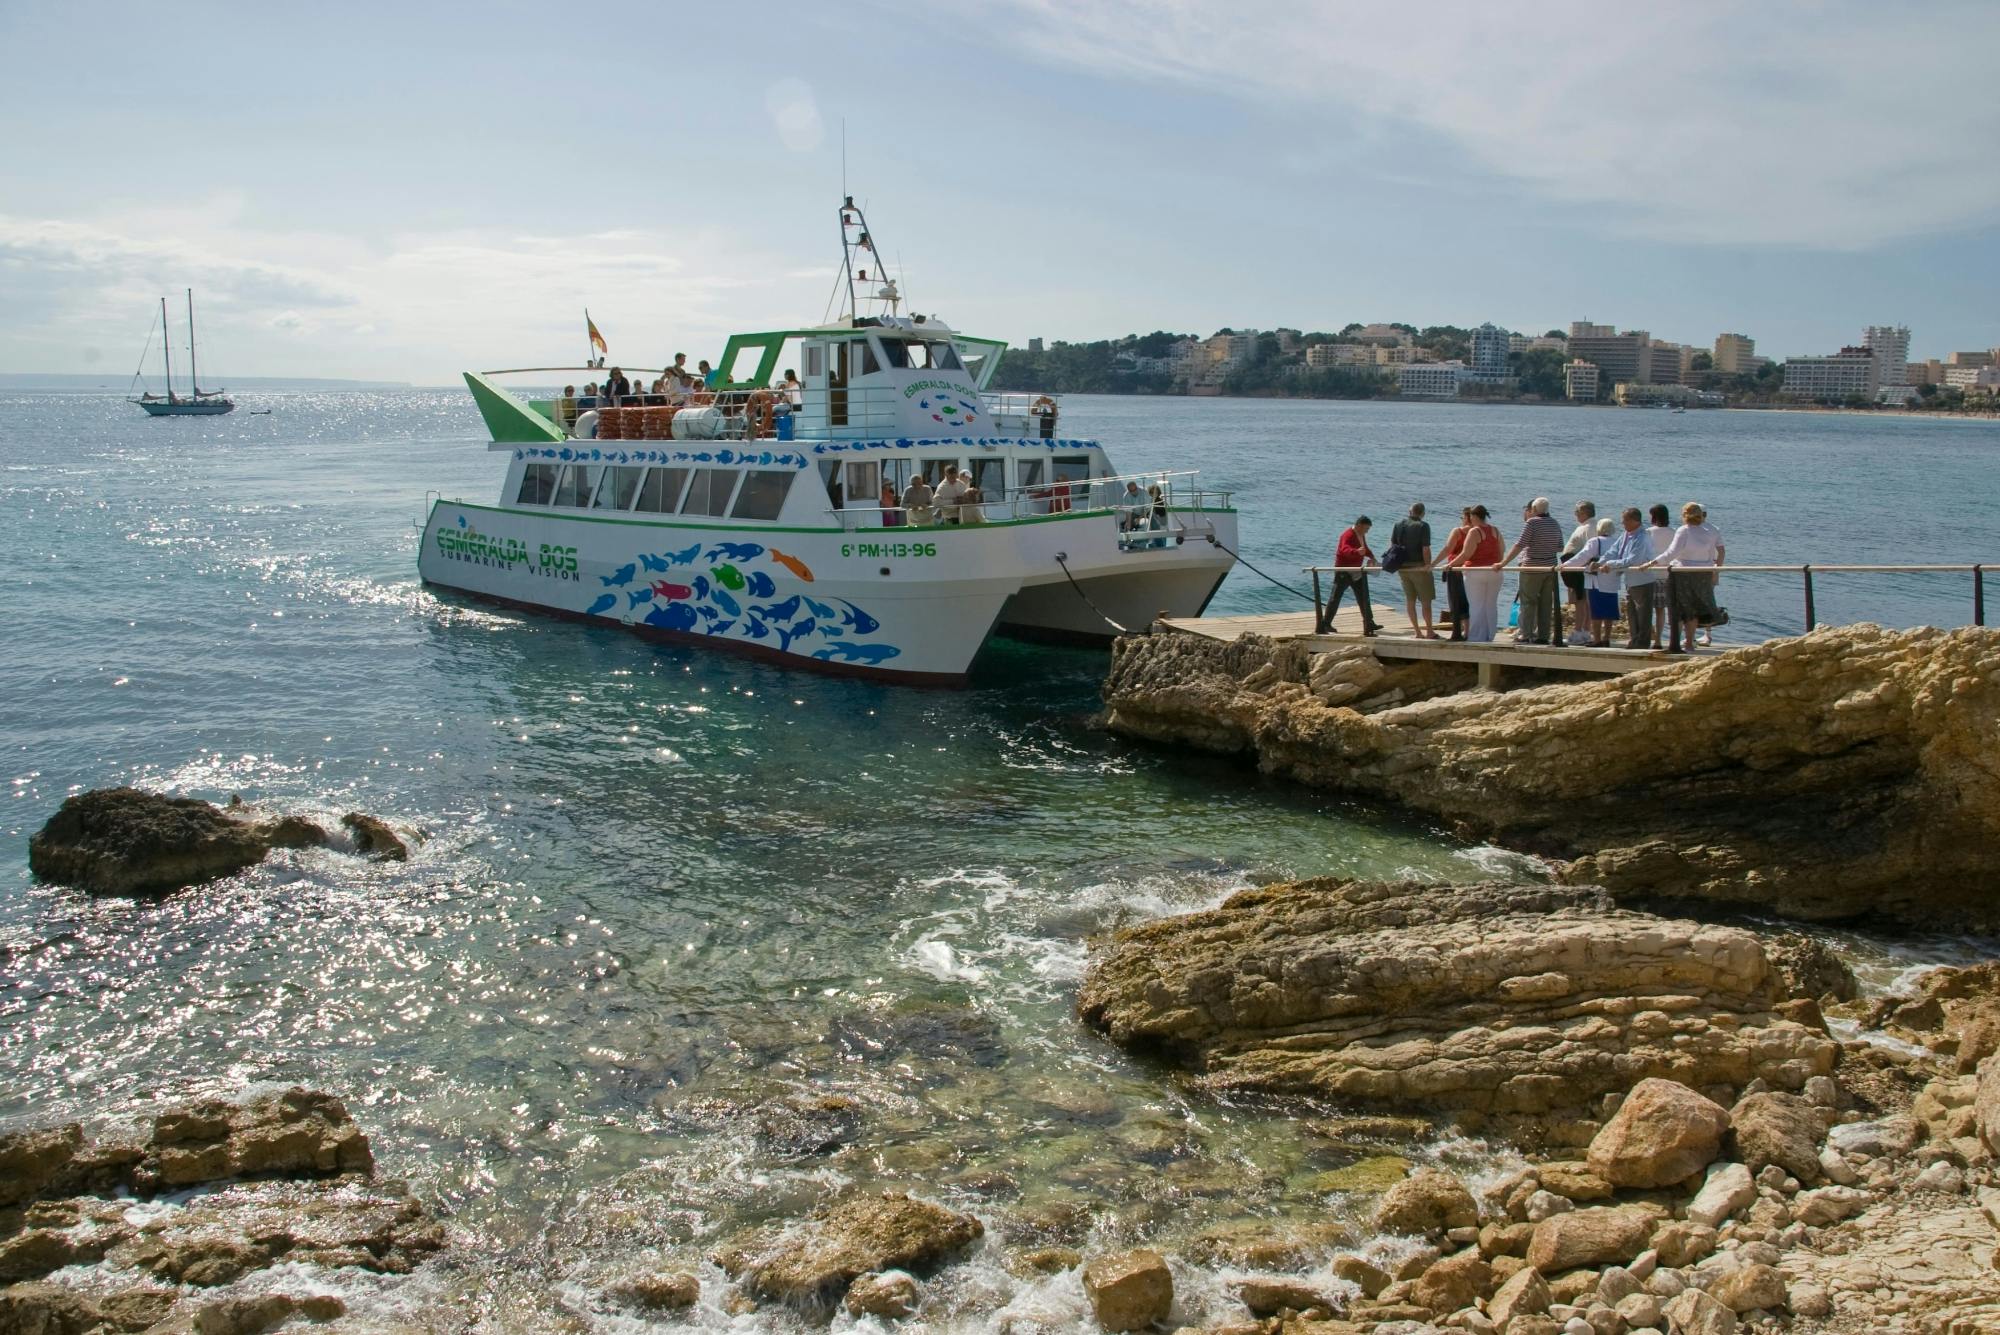 Two-hour Dolphin Spotting Catamaran Cruise with Cruceros Costa de Calvia